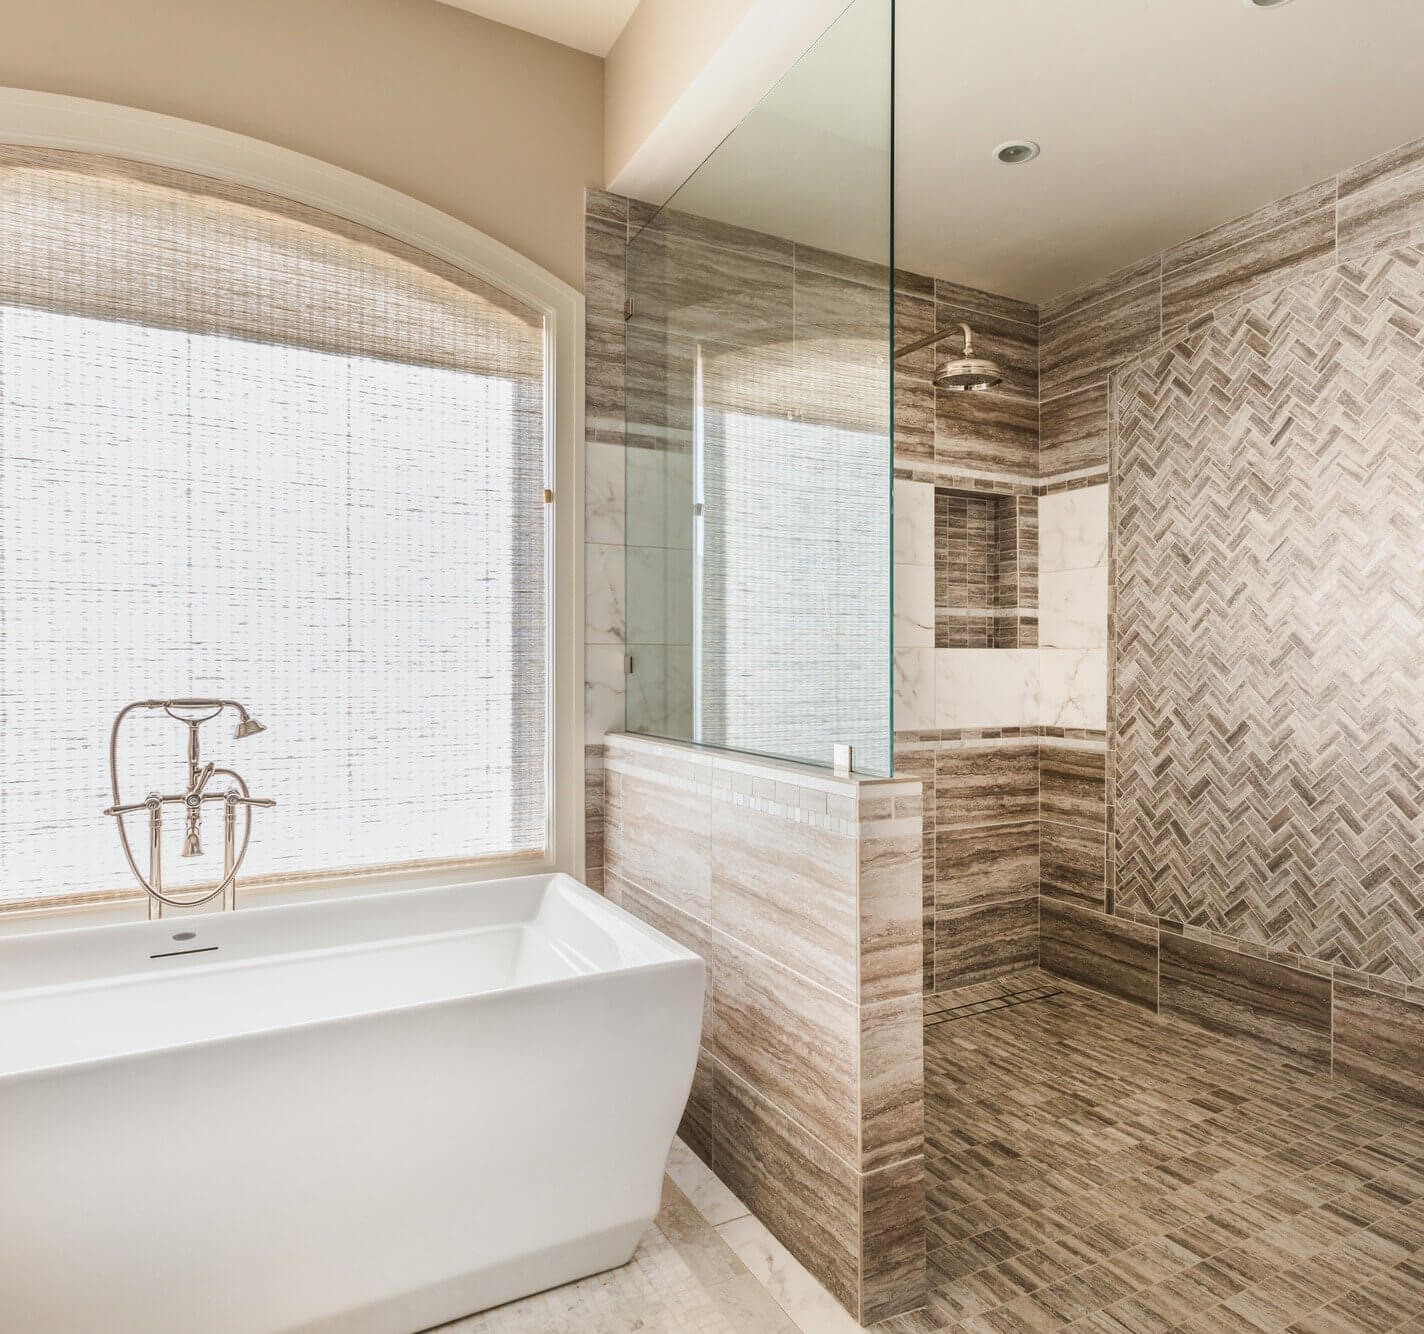 Bathroom In Luxury Home: Bathtub And Shower